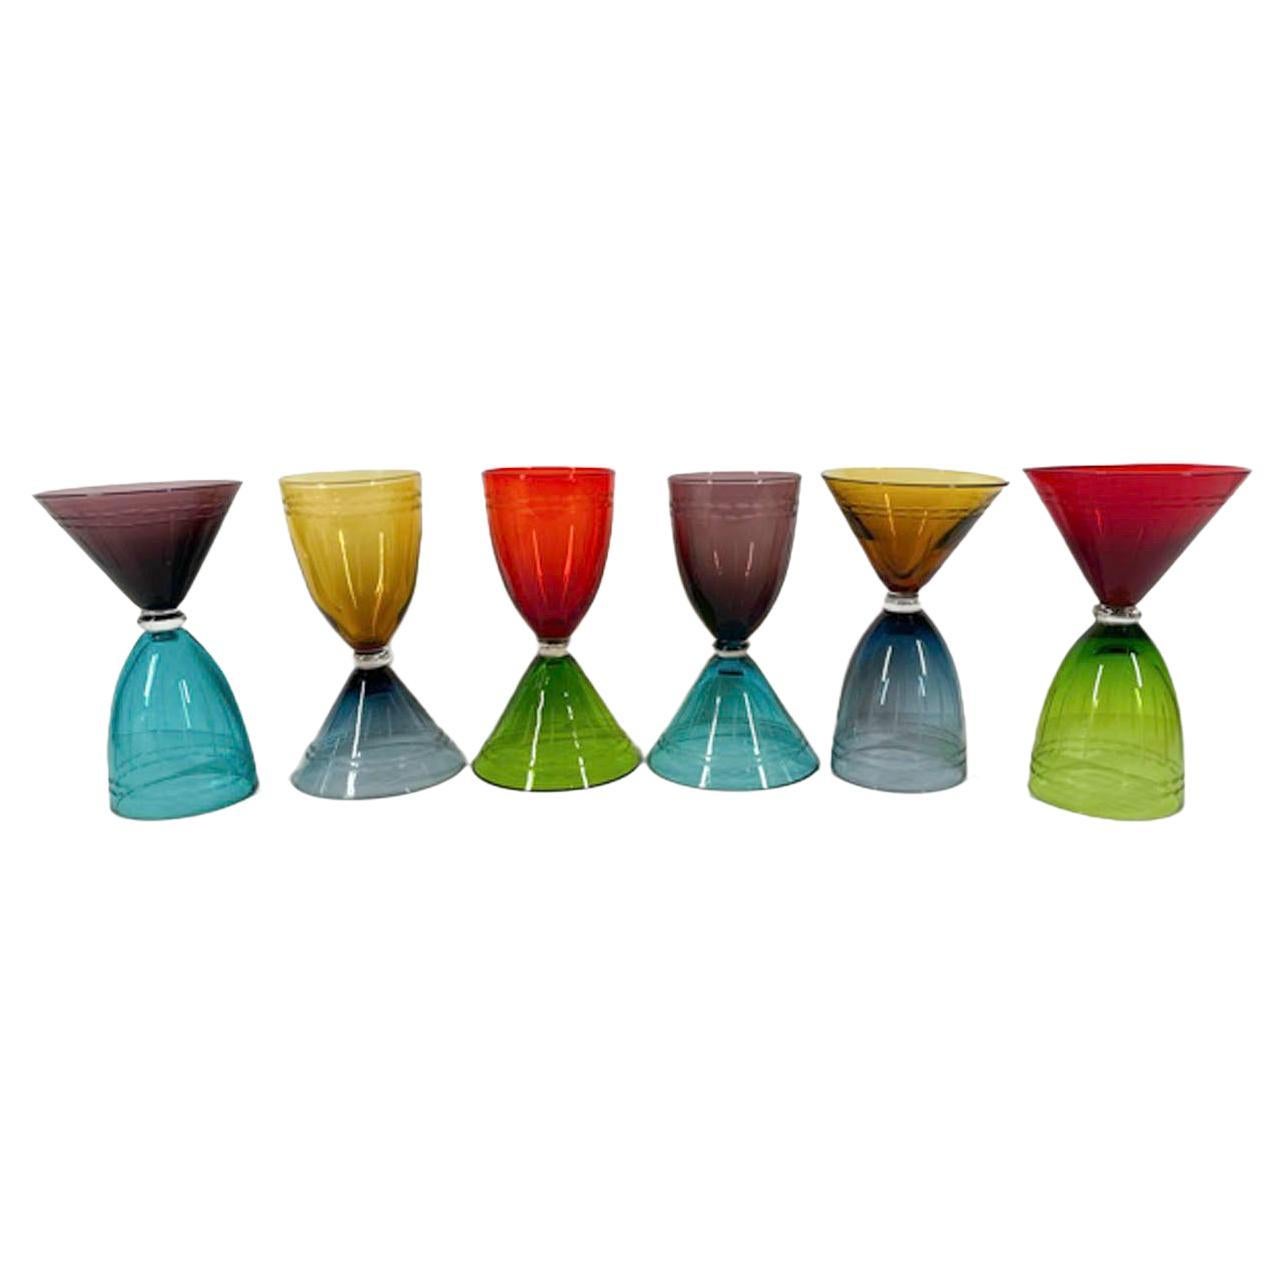 Six Vintage, Jewel Colored, Double Sided Martini/Wine Glasses, Three Pairs